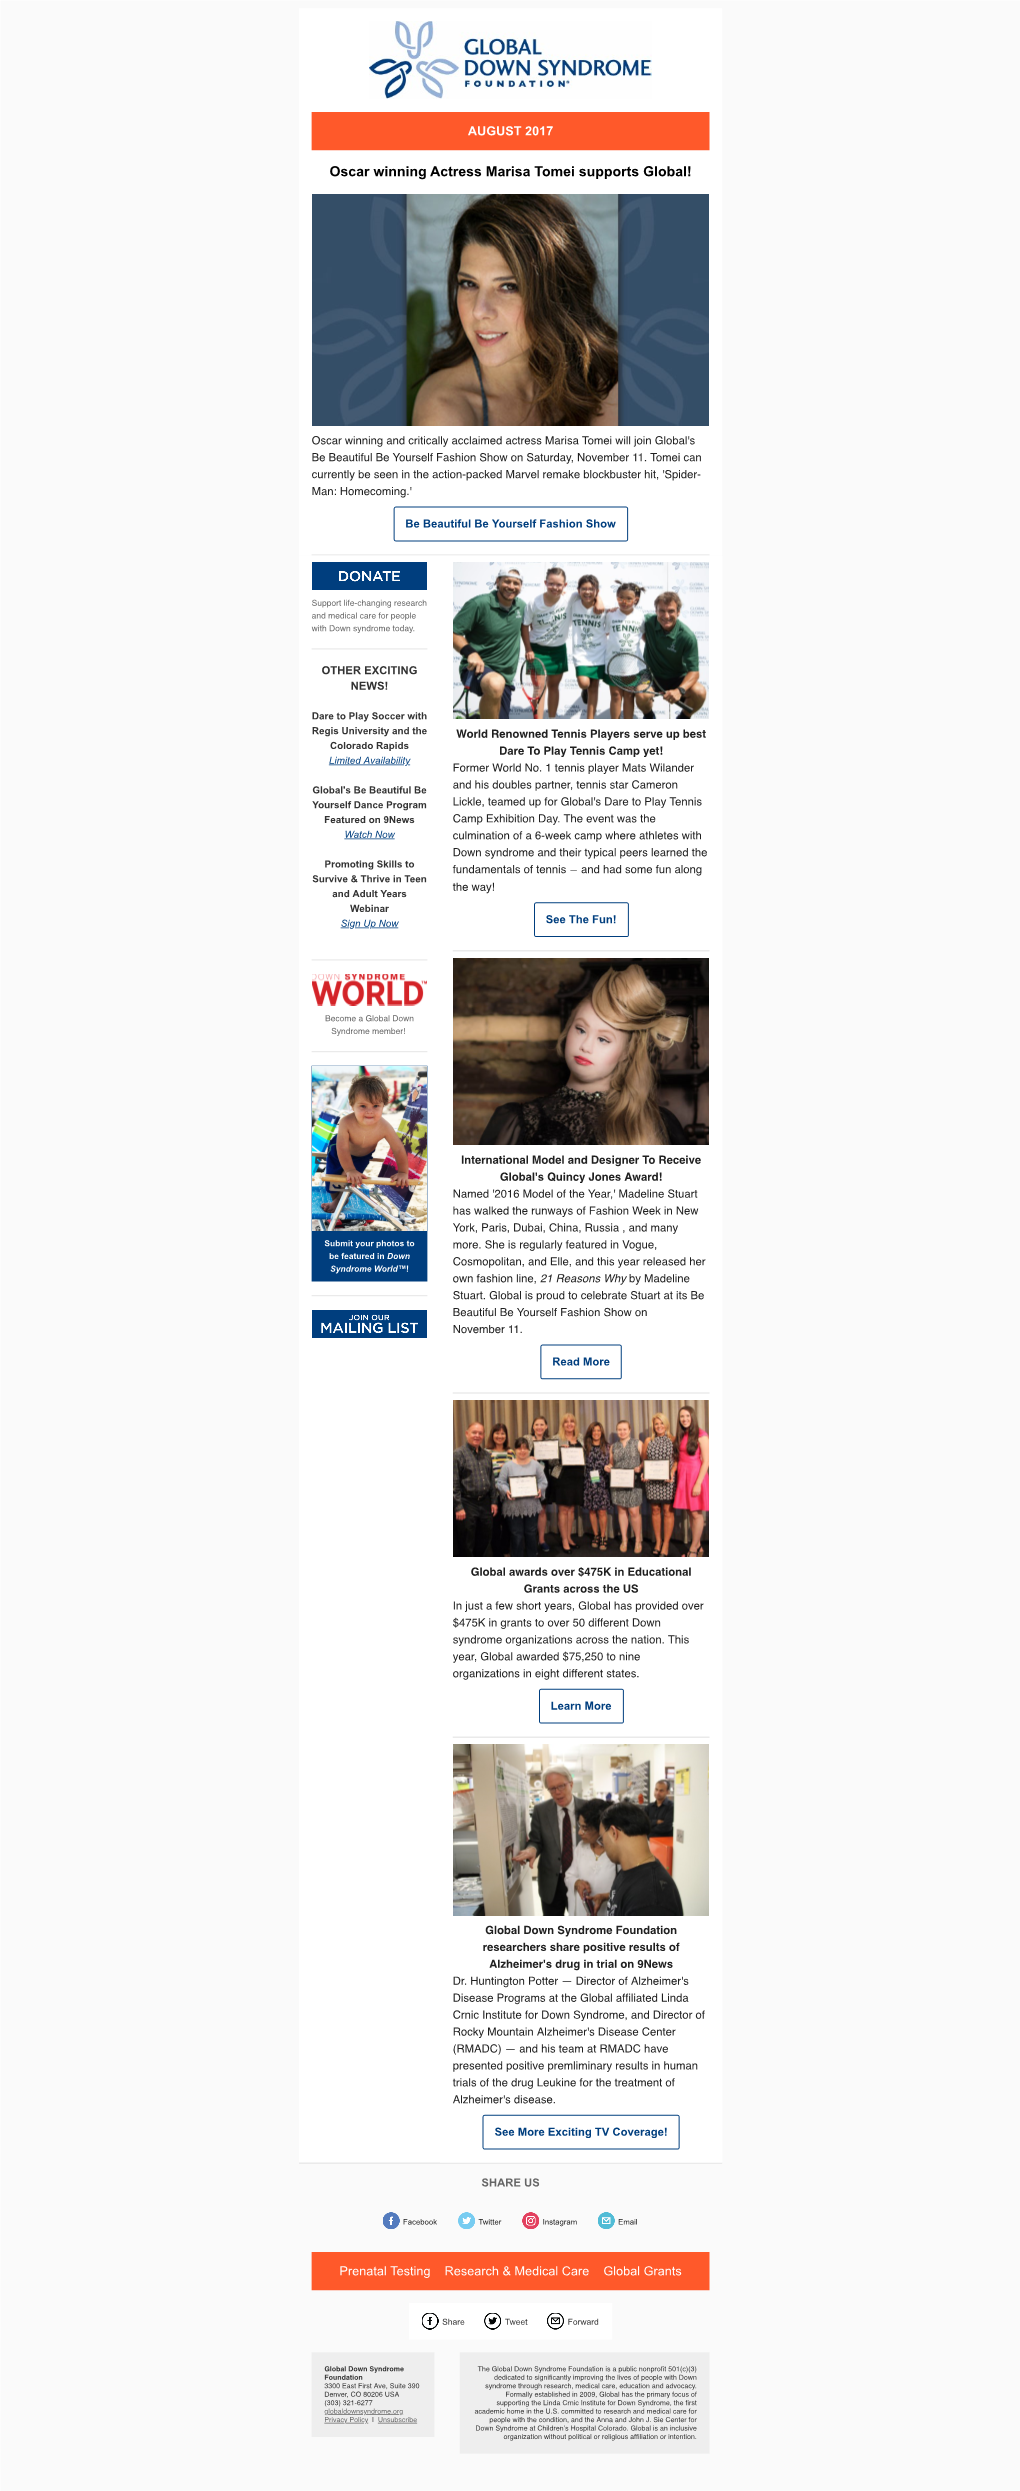 Oscar Winning Actress Marisa Tomei Supports Global!